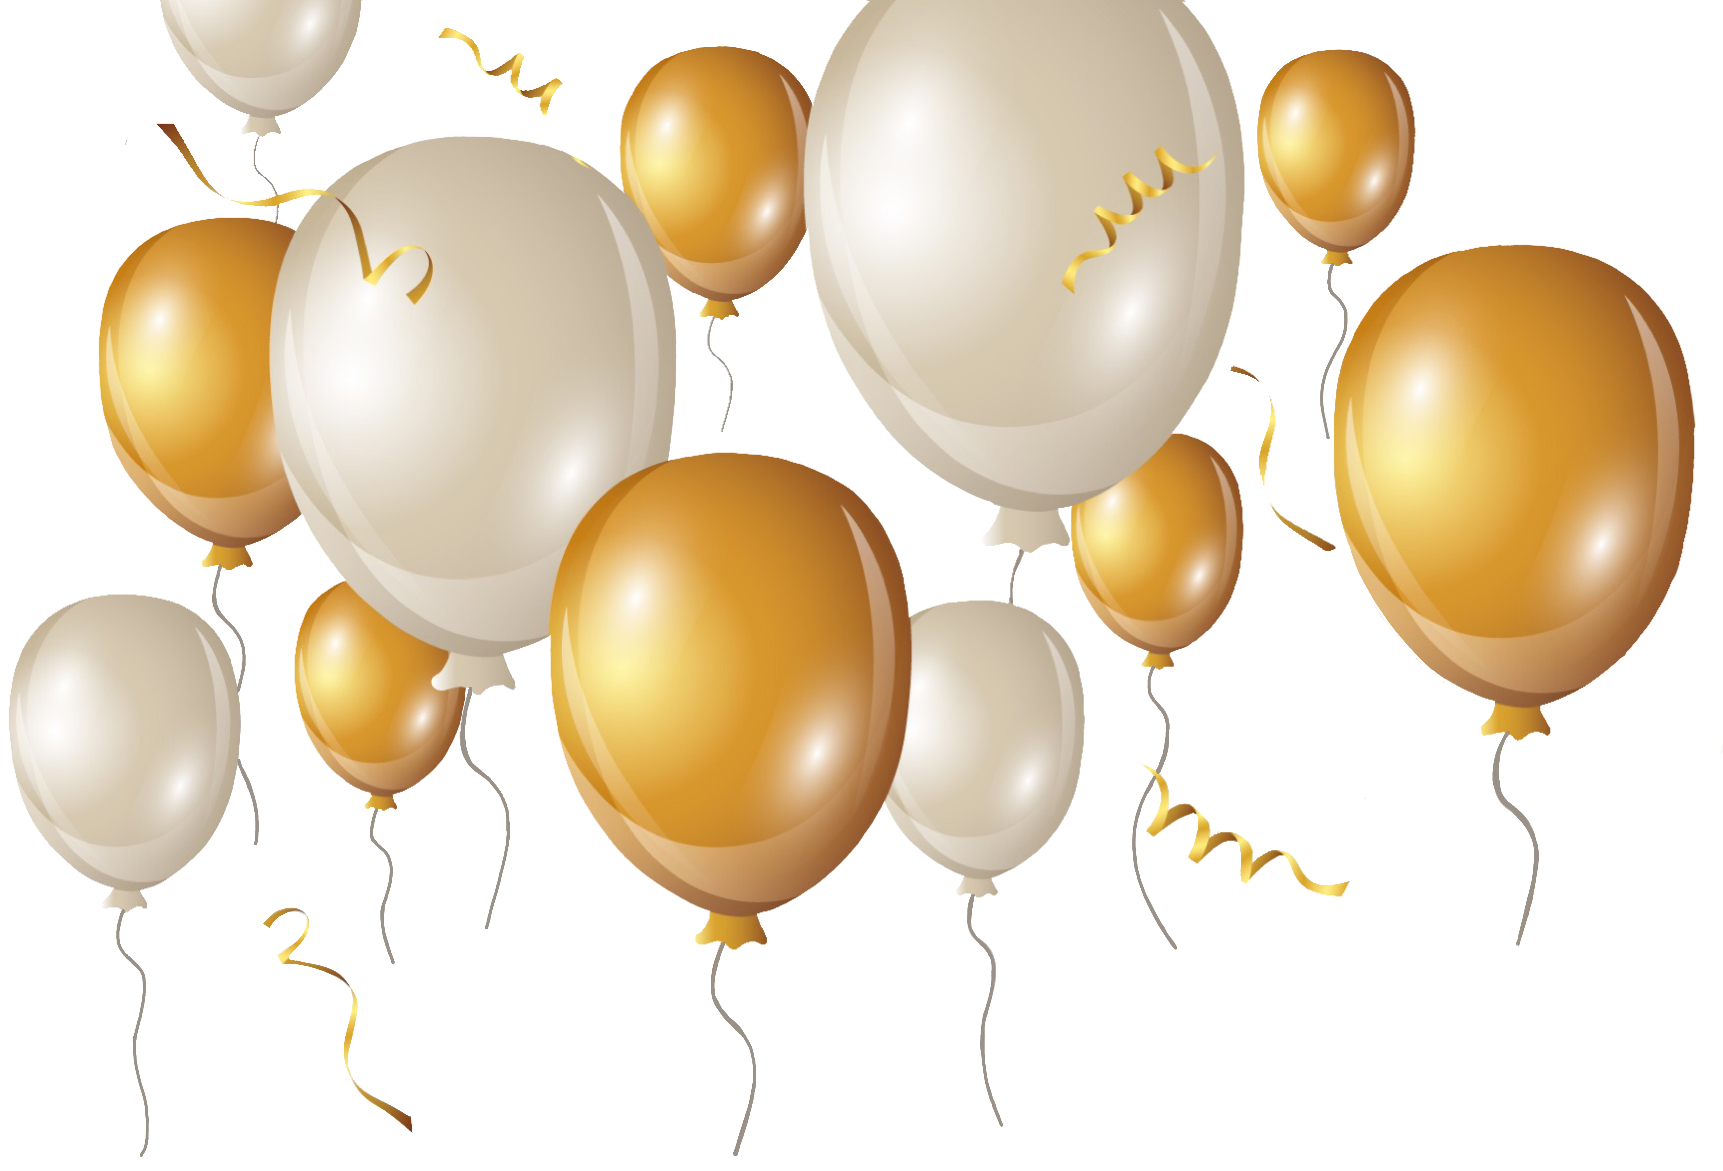 balloons party gold white celebration freetoedit...